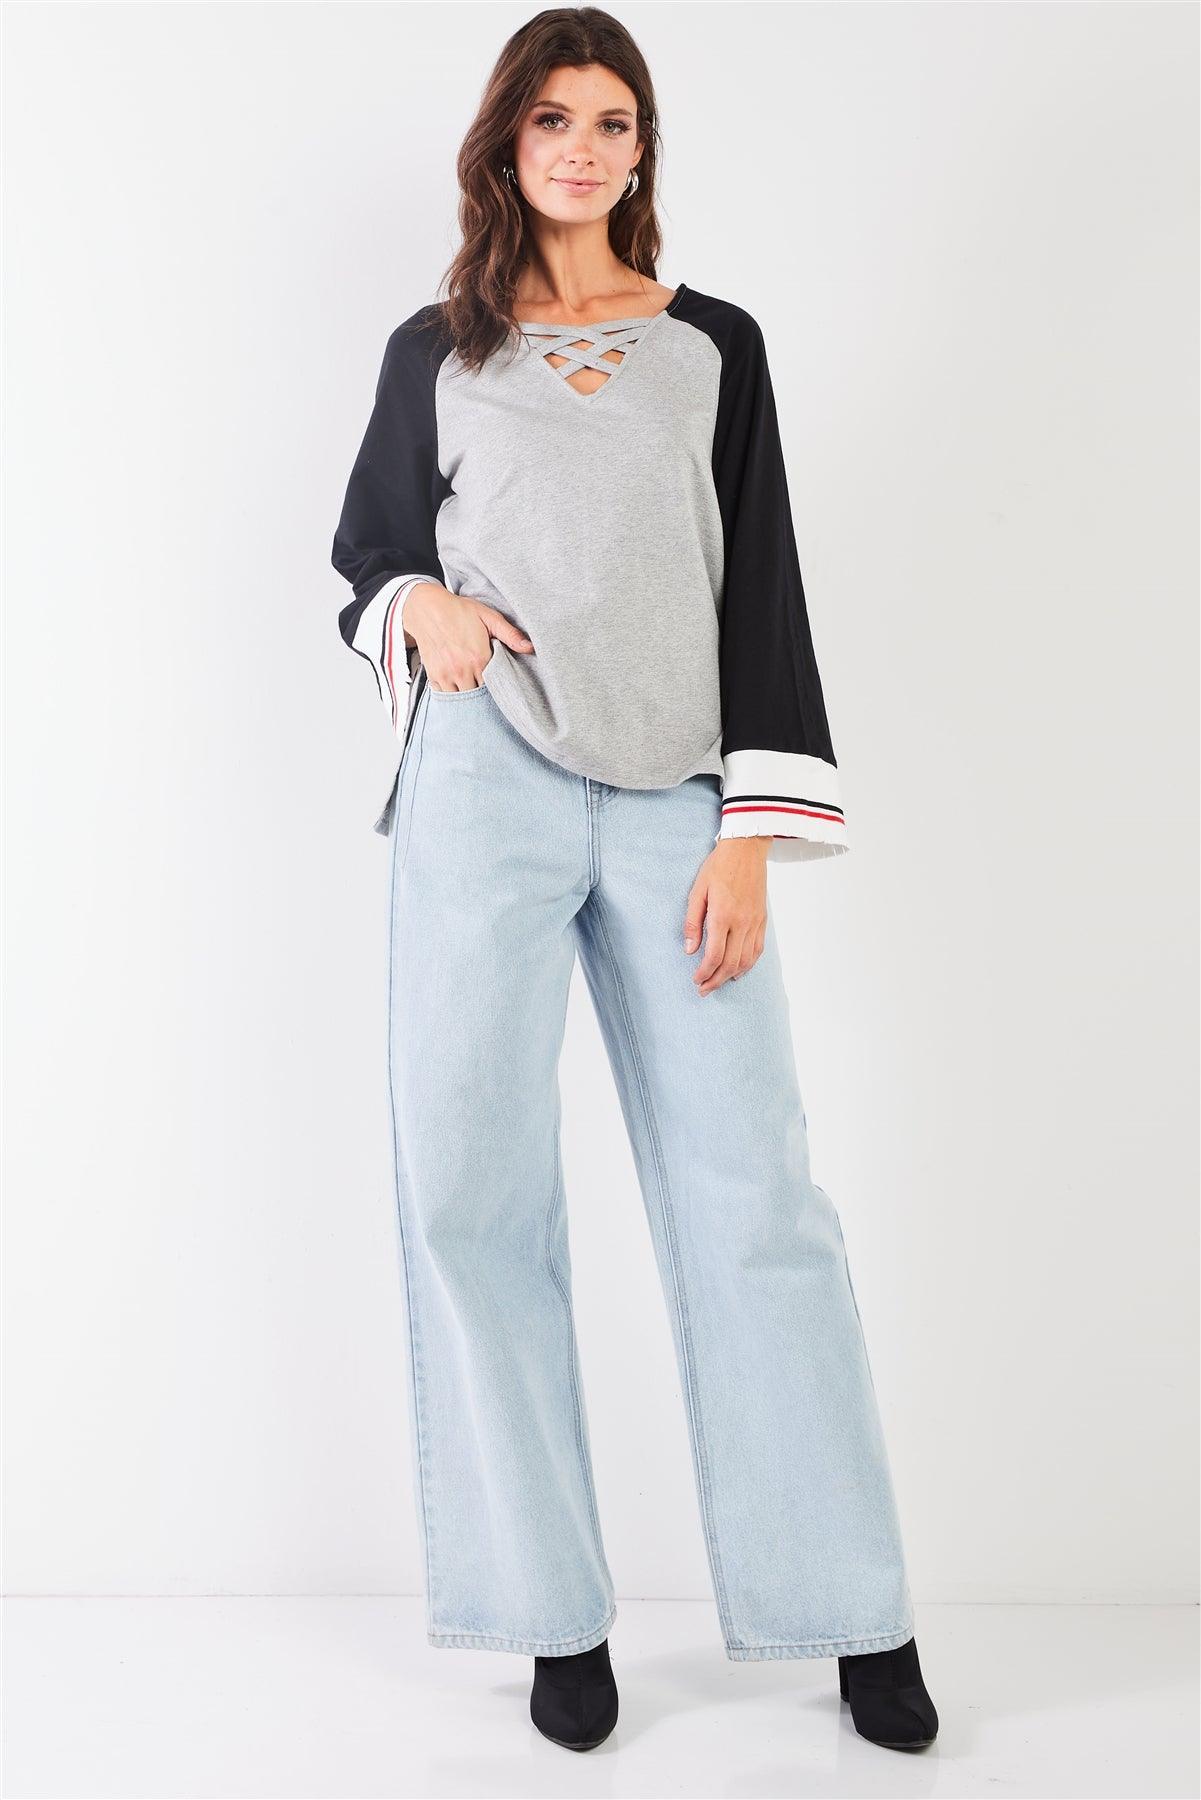 Heather Grey & Black Lace-Up V-Neck Long Bell Sleeve Asymmetrical Sweatshirt /2-1-2